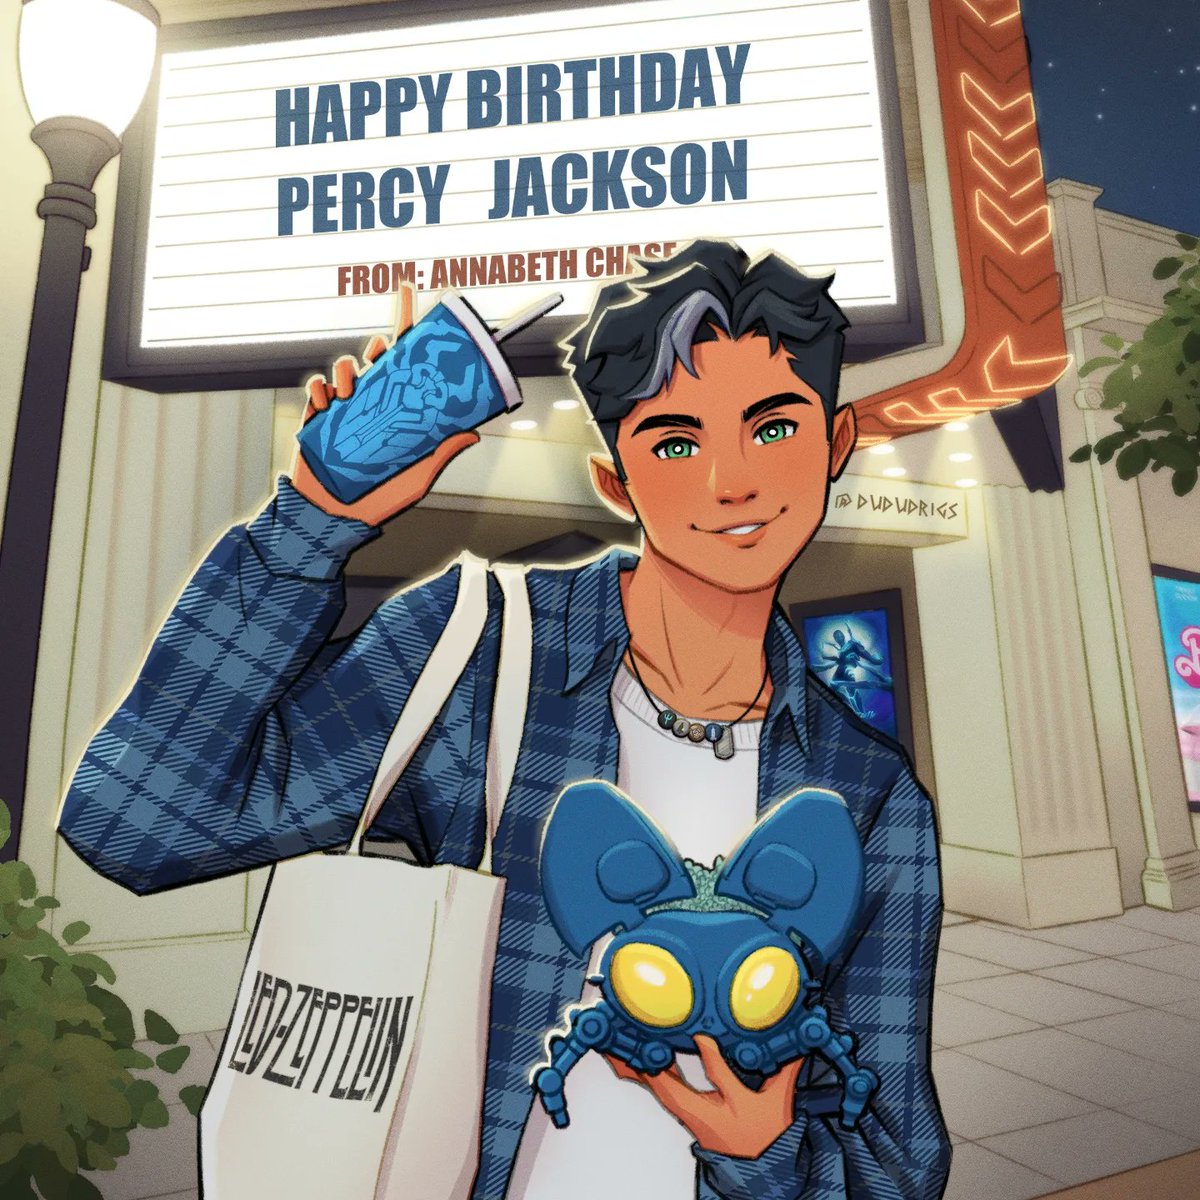 HAPPY BRITHDAY PERCY JACKSON 🌊💙
#pjo #hoo #PercyJacksonfanart #percyjackson #BlueBeetleTH #BesouroAzul #HappyBirthdayPercyJackson